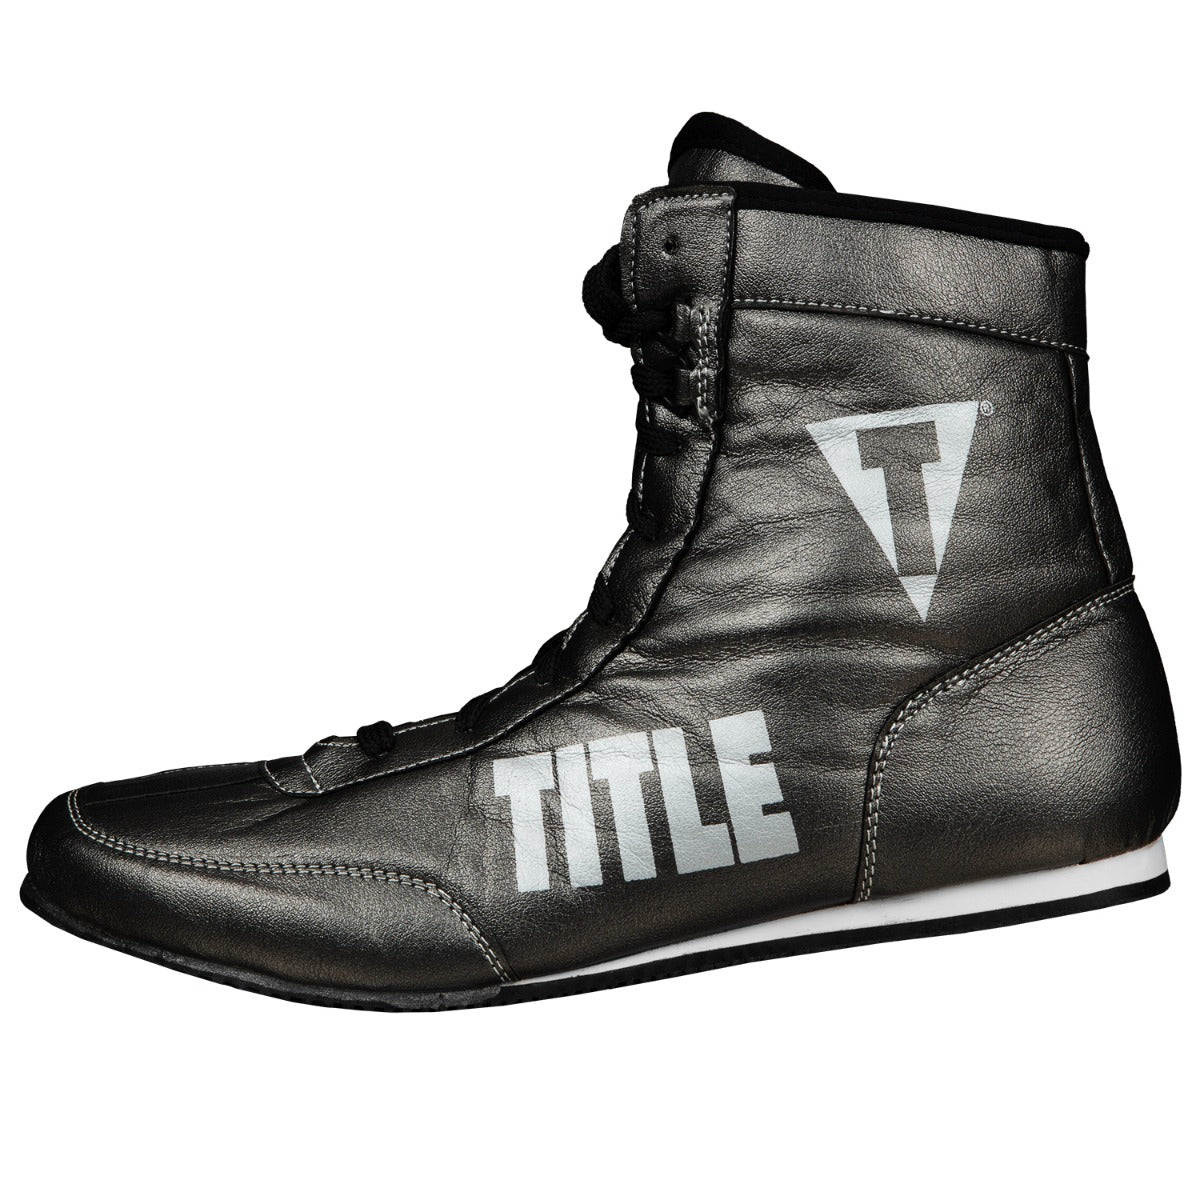 TITLE Money Metallic Flash Boxers | TITLE Boxing Gear